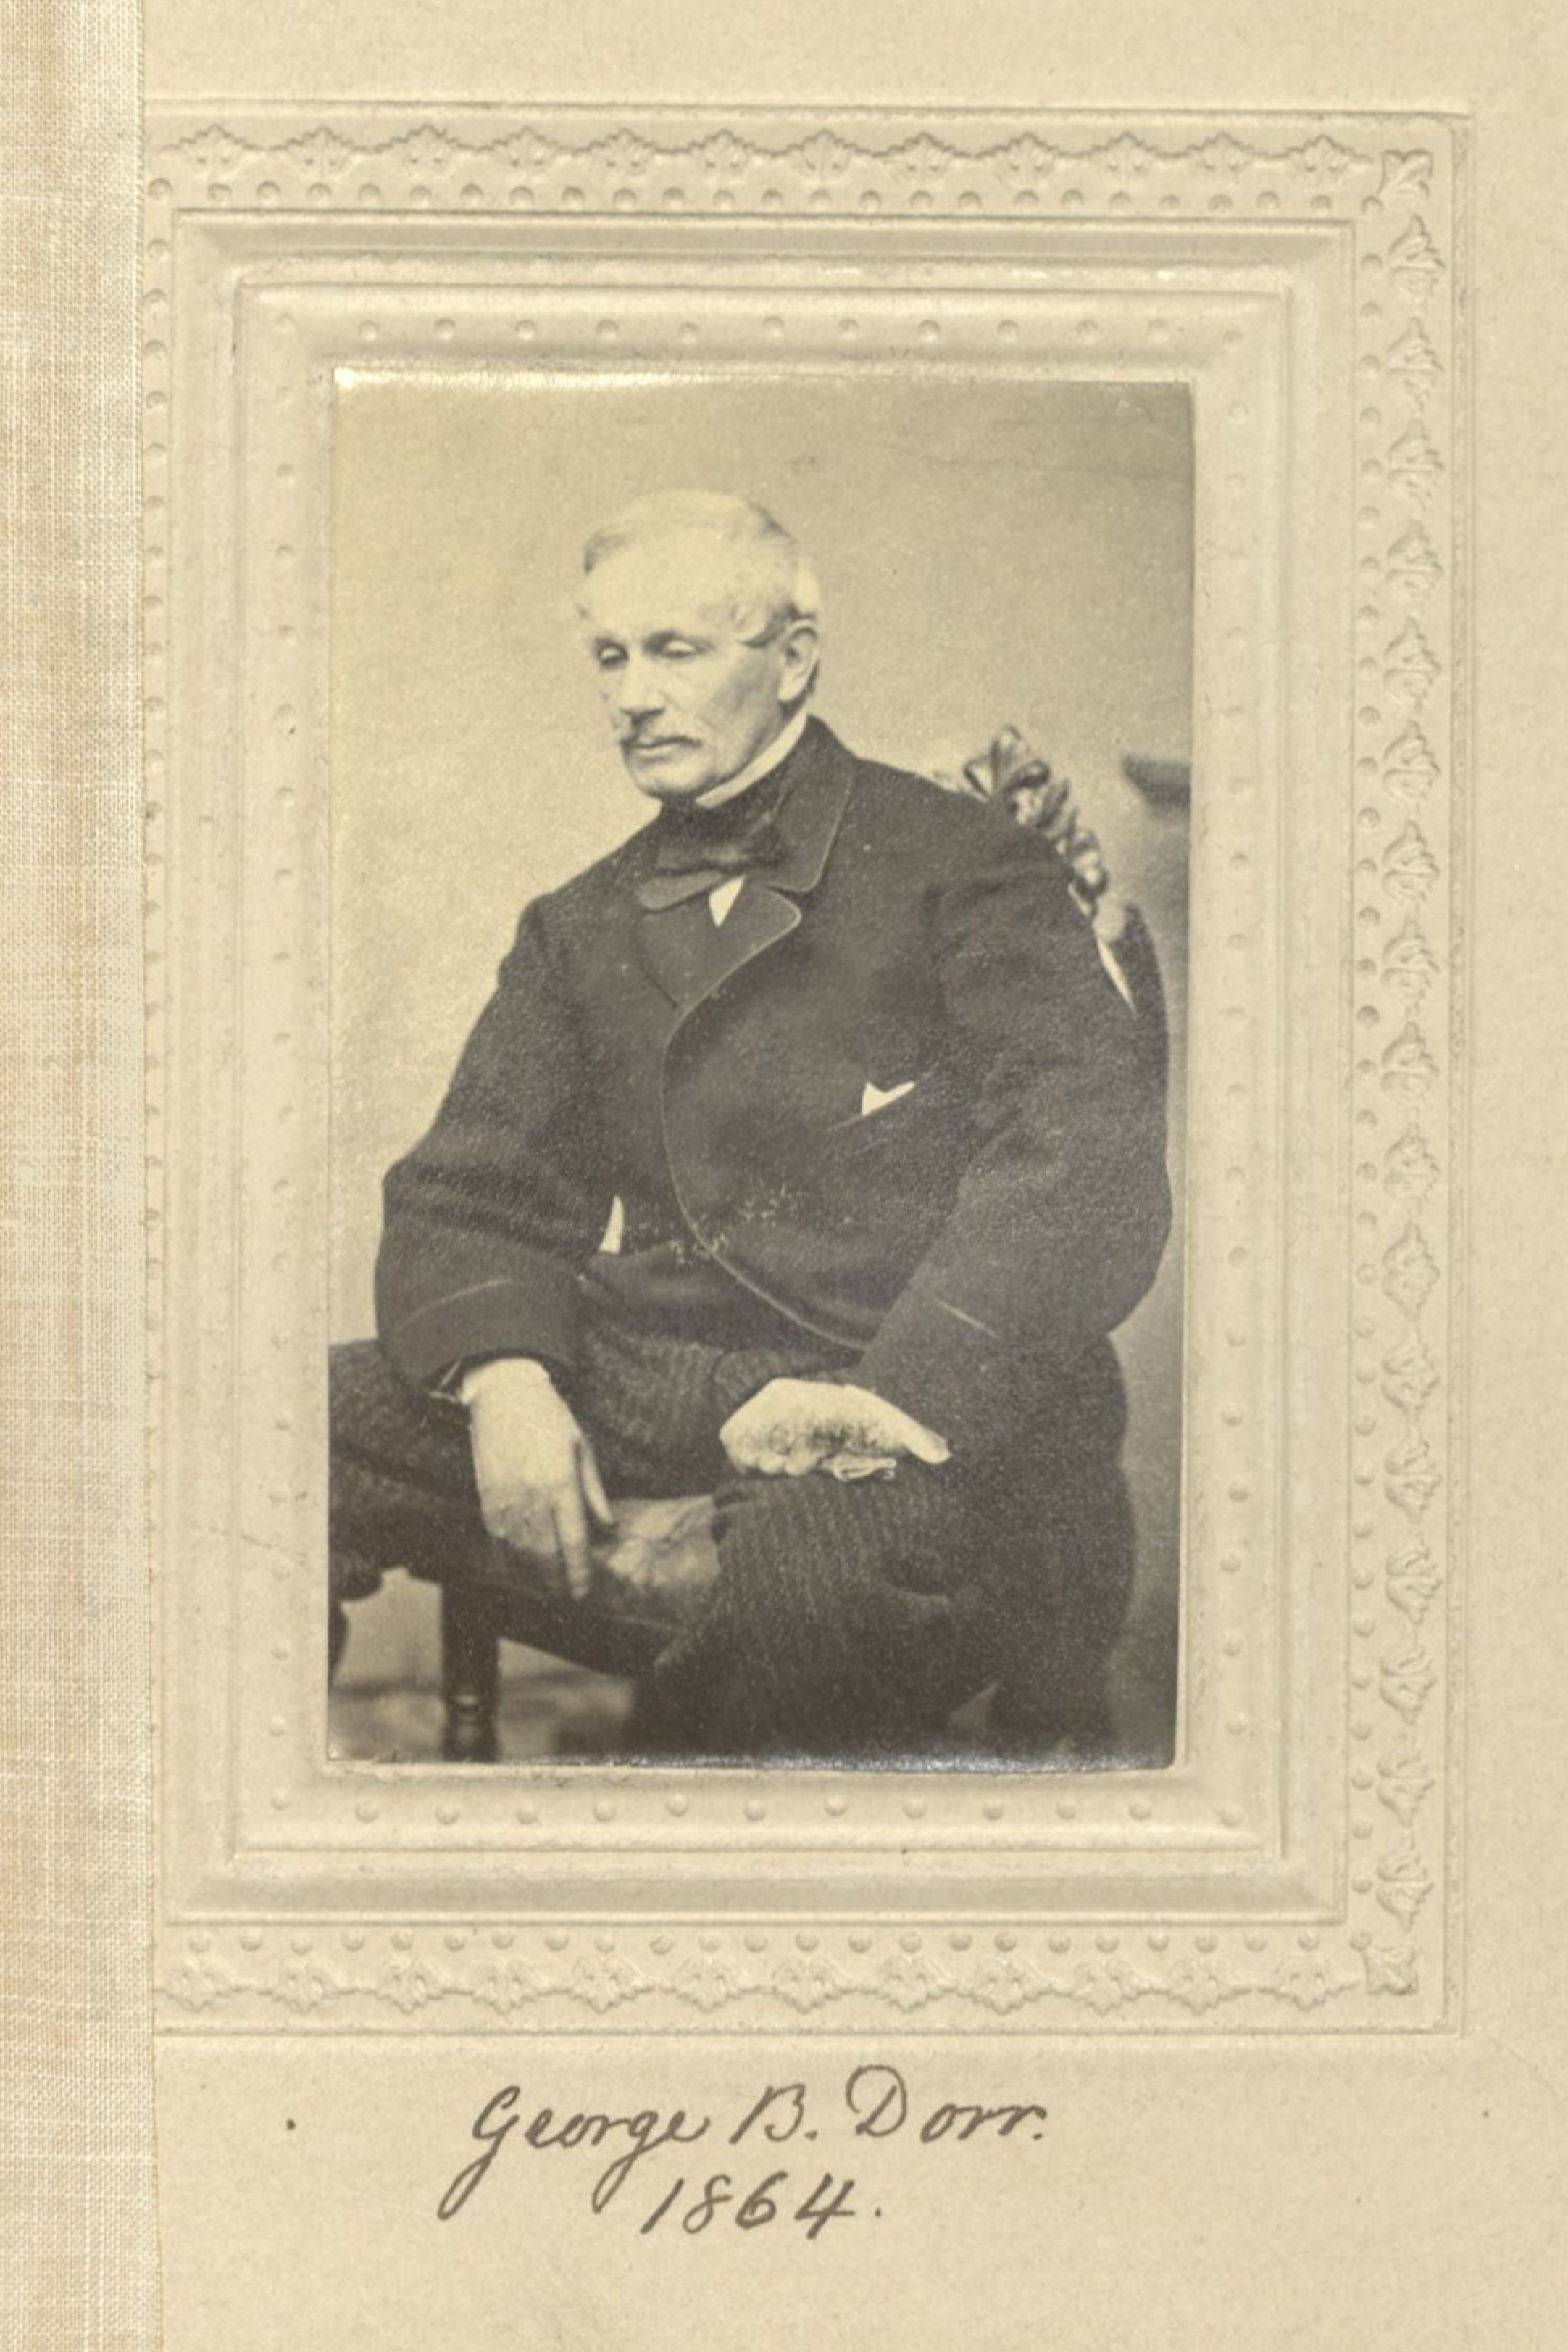 Member portrait of George B. Dorr